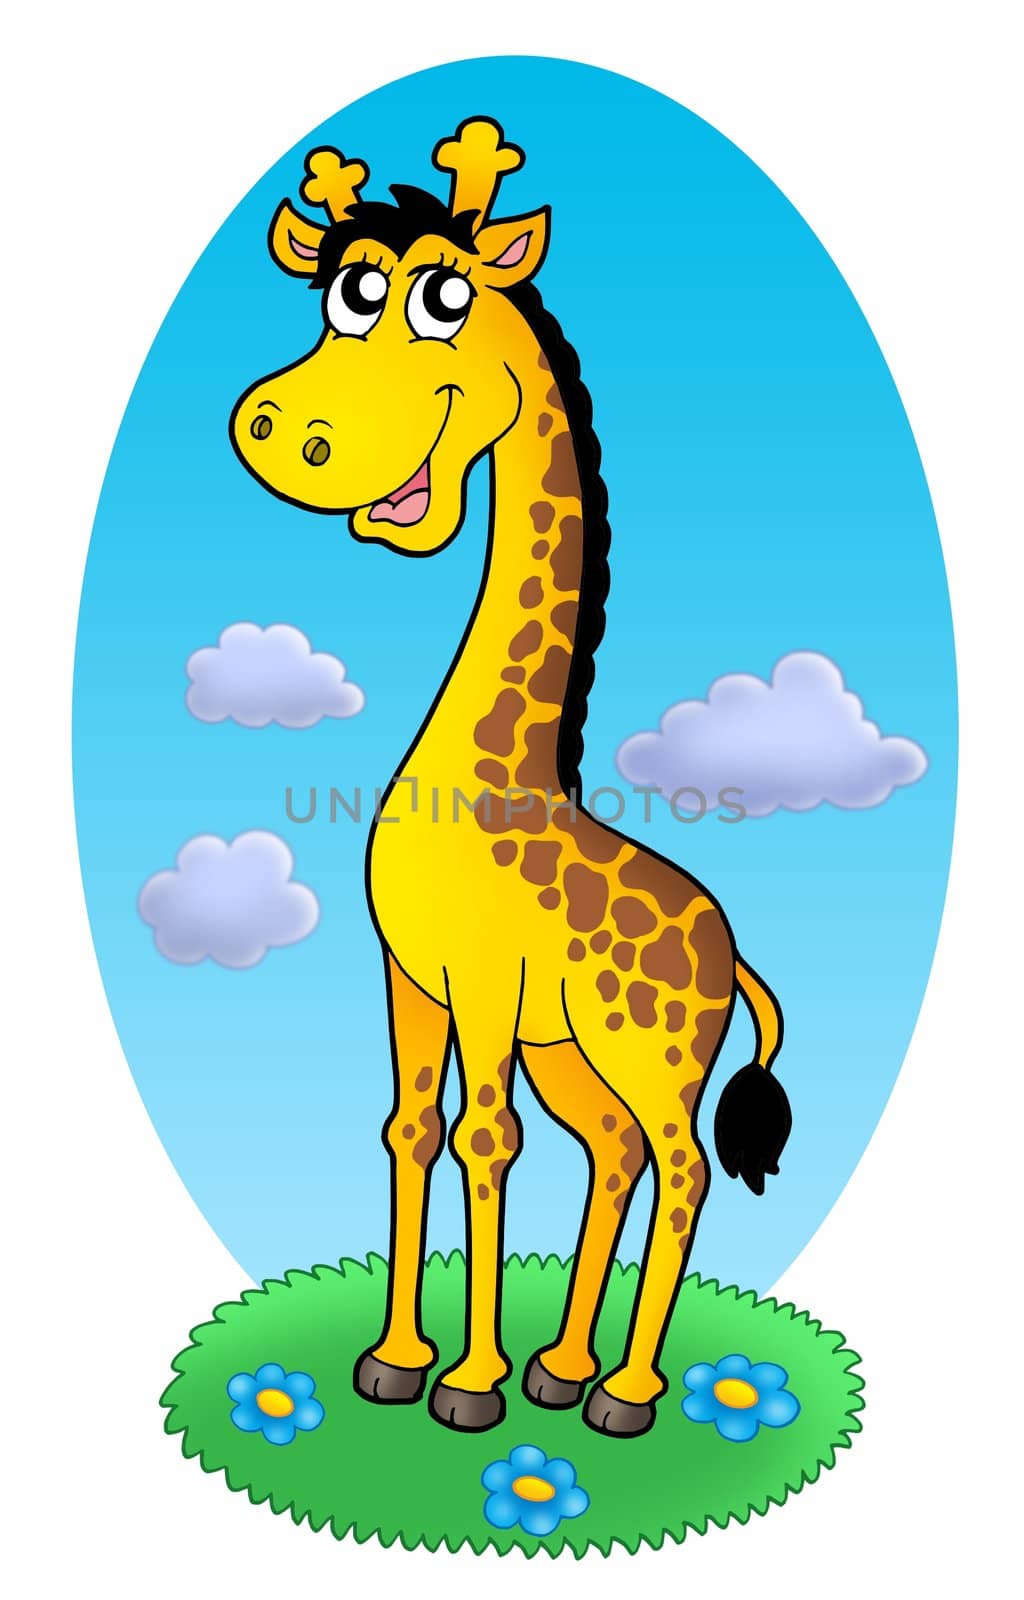 Cute giraffe standing on grass - color illustration.